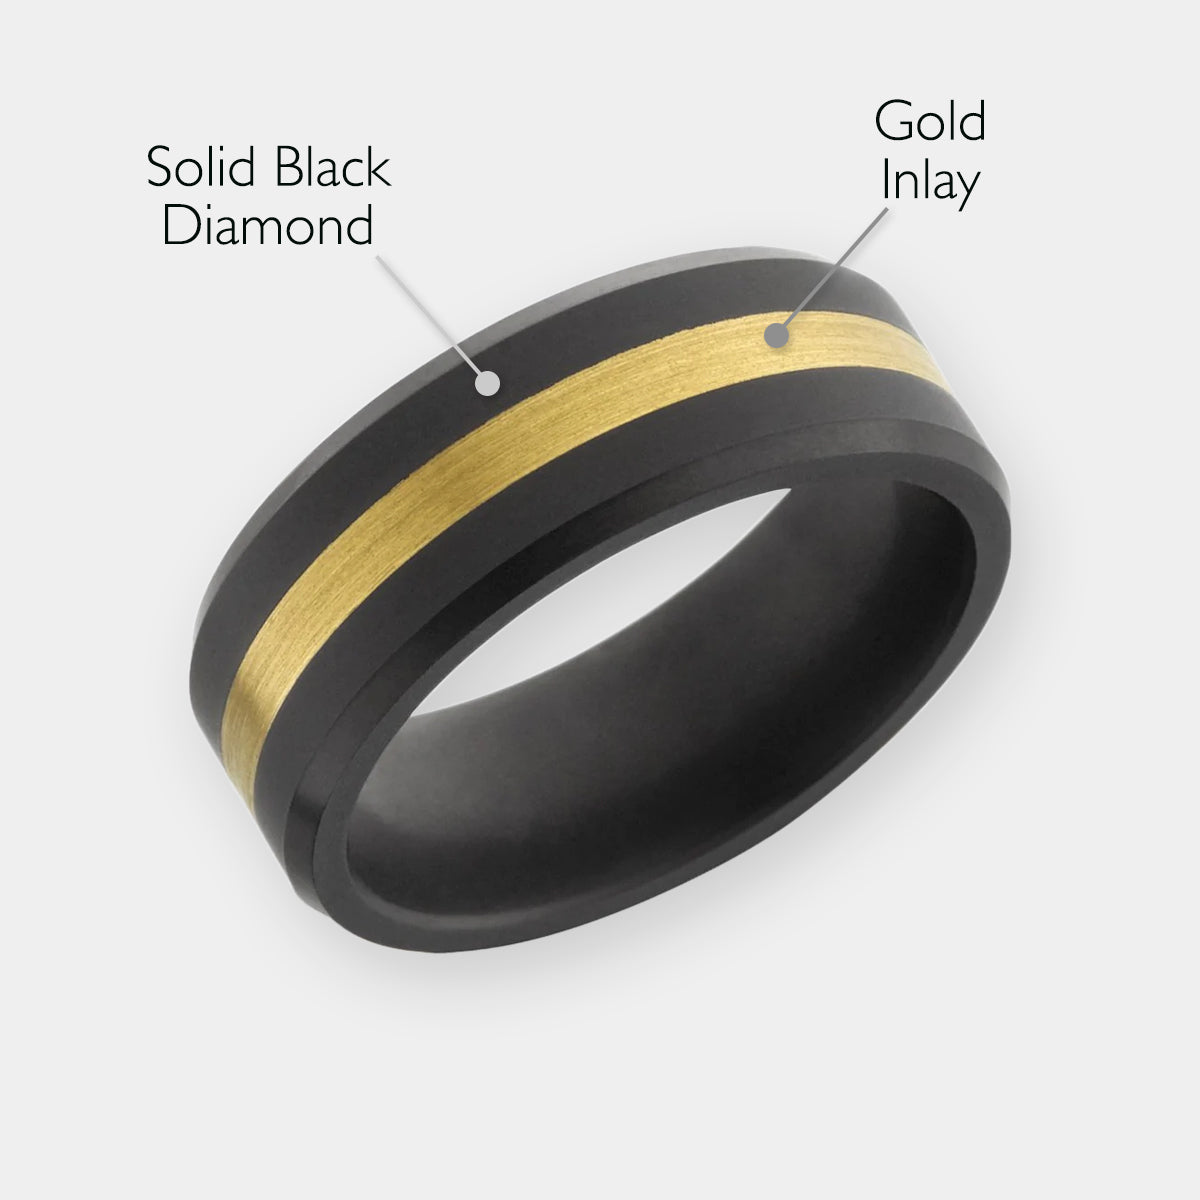 ElysiumBlack.com | Elysium ARES - Solid Black Diamond Ring - 24K Yellow Gold Inlay - Image 2